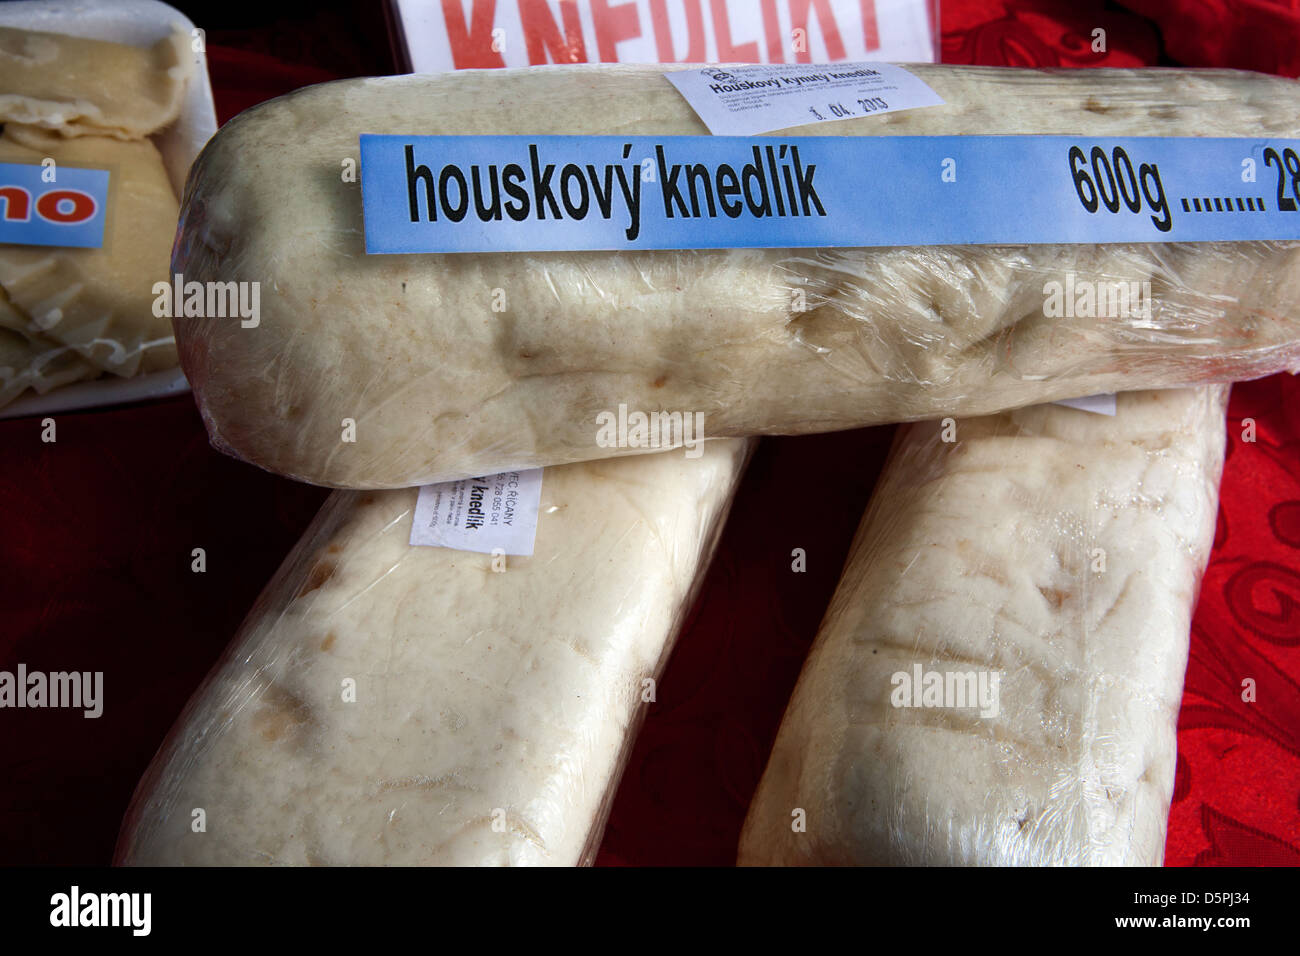 Houskovy knedlik - Dumplings, Farmers market  Prague Czech Republic Stock Photo